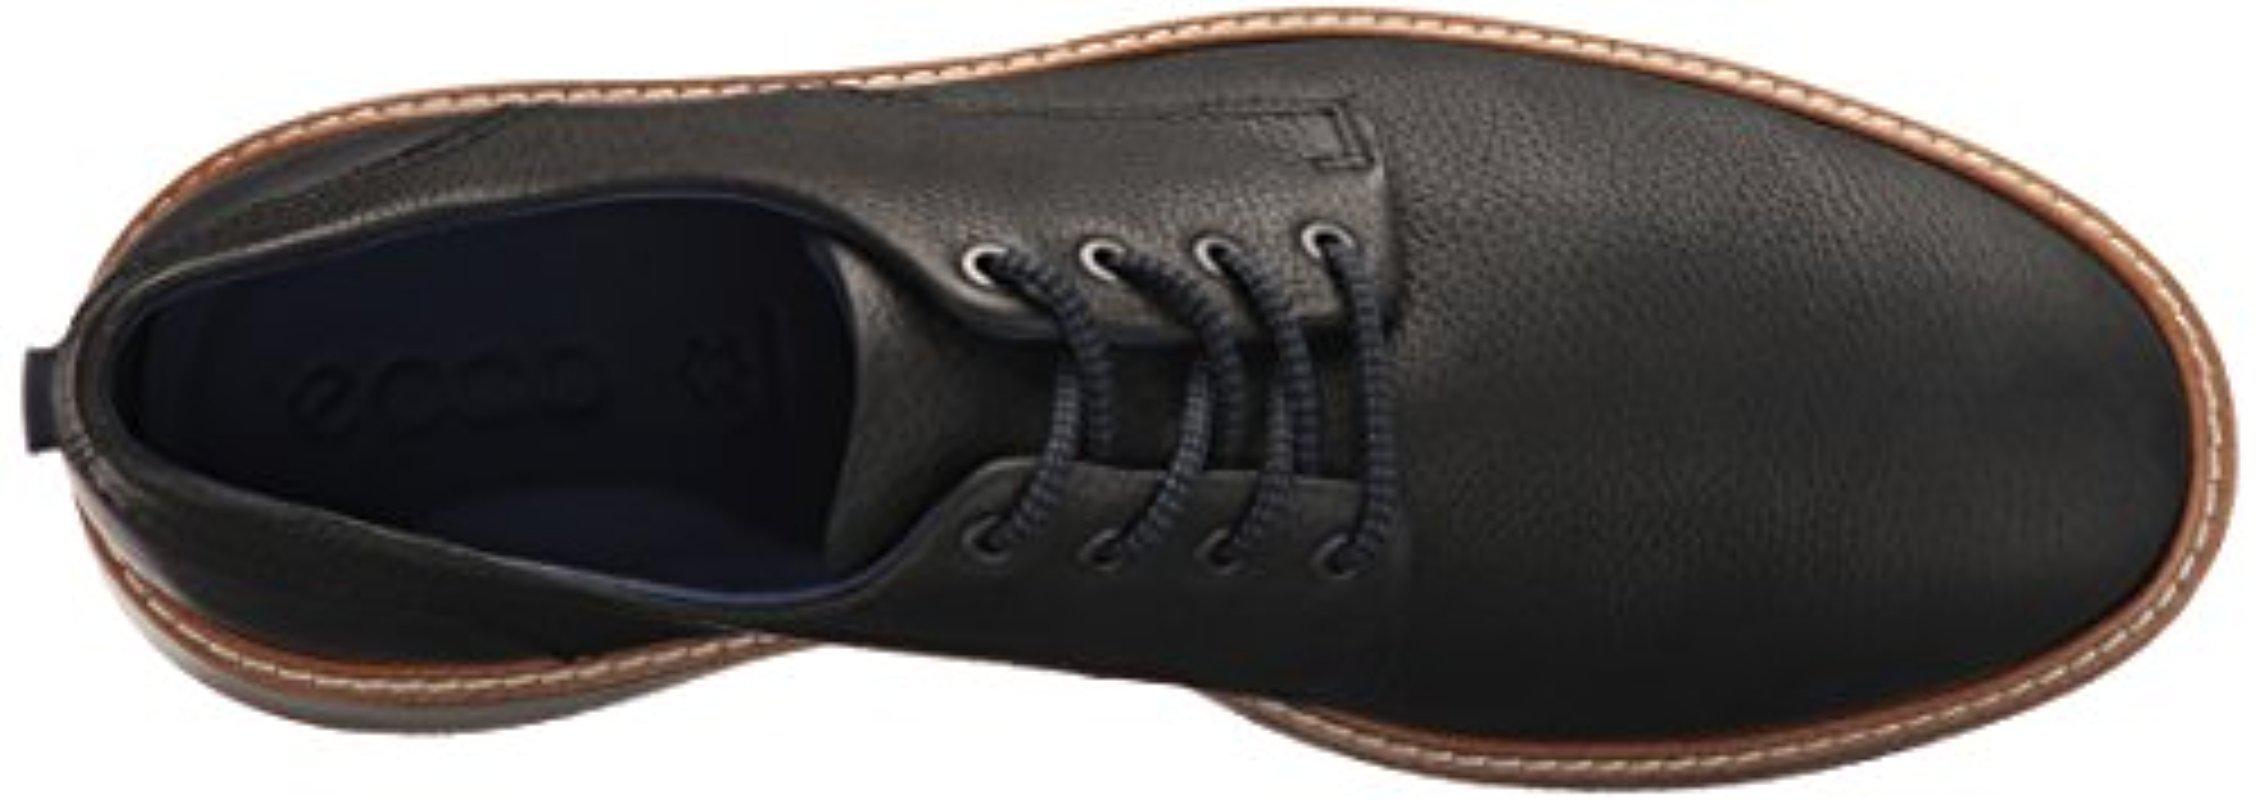 Ecco Leather Aurora Tie Oxford in Black/Black (Black) for Men - Lyst